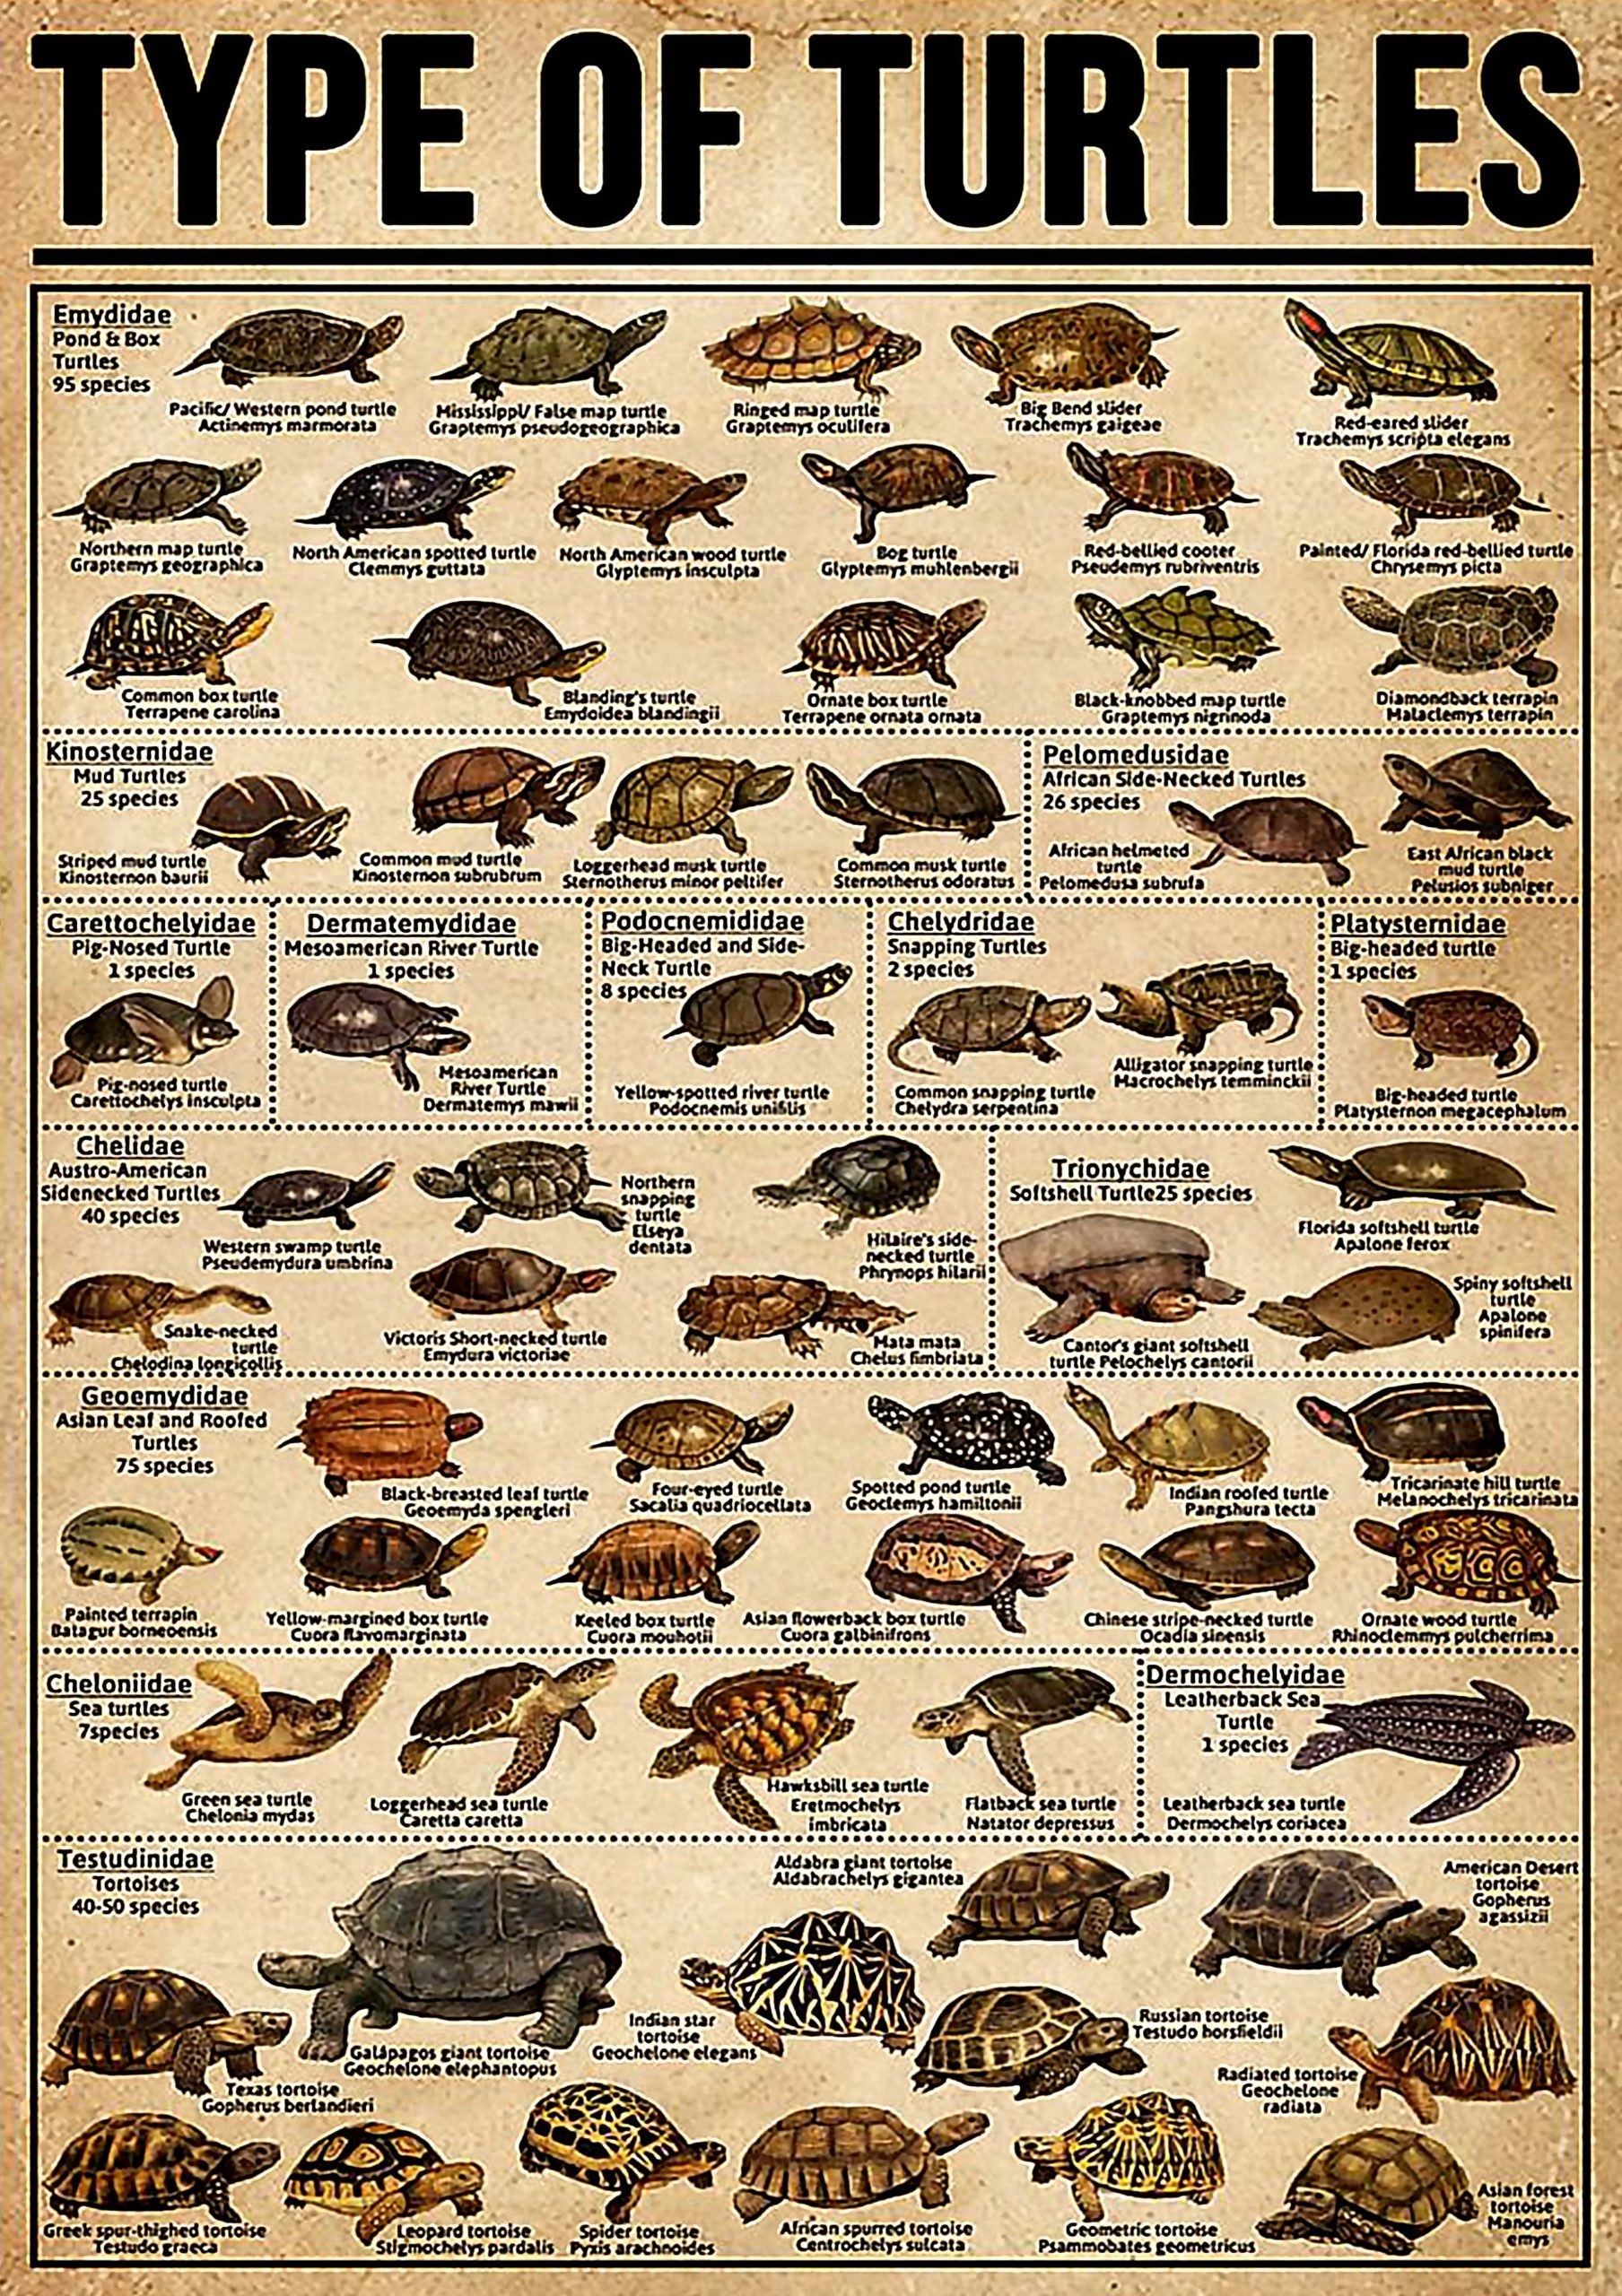 vintage type of turtles poster 1